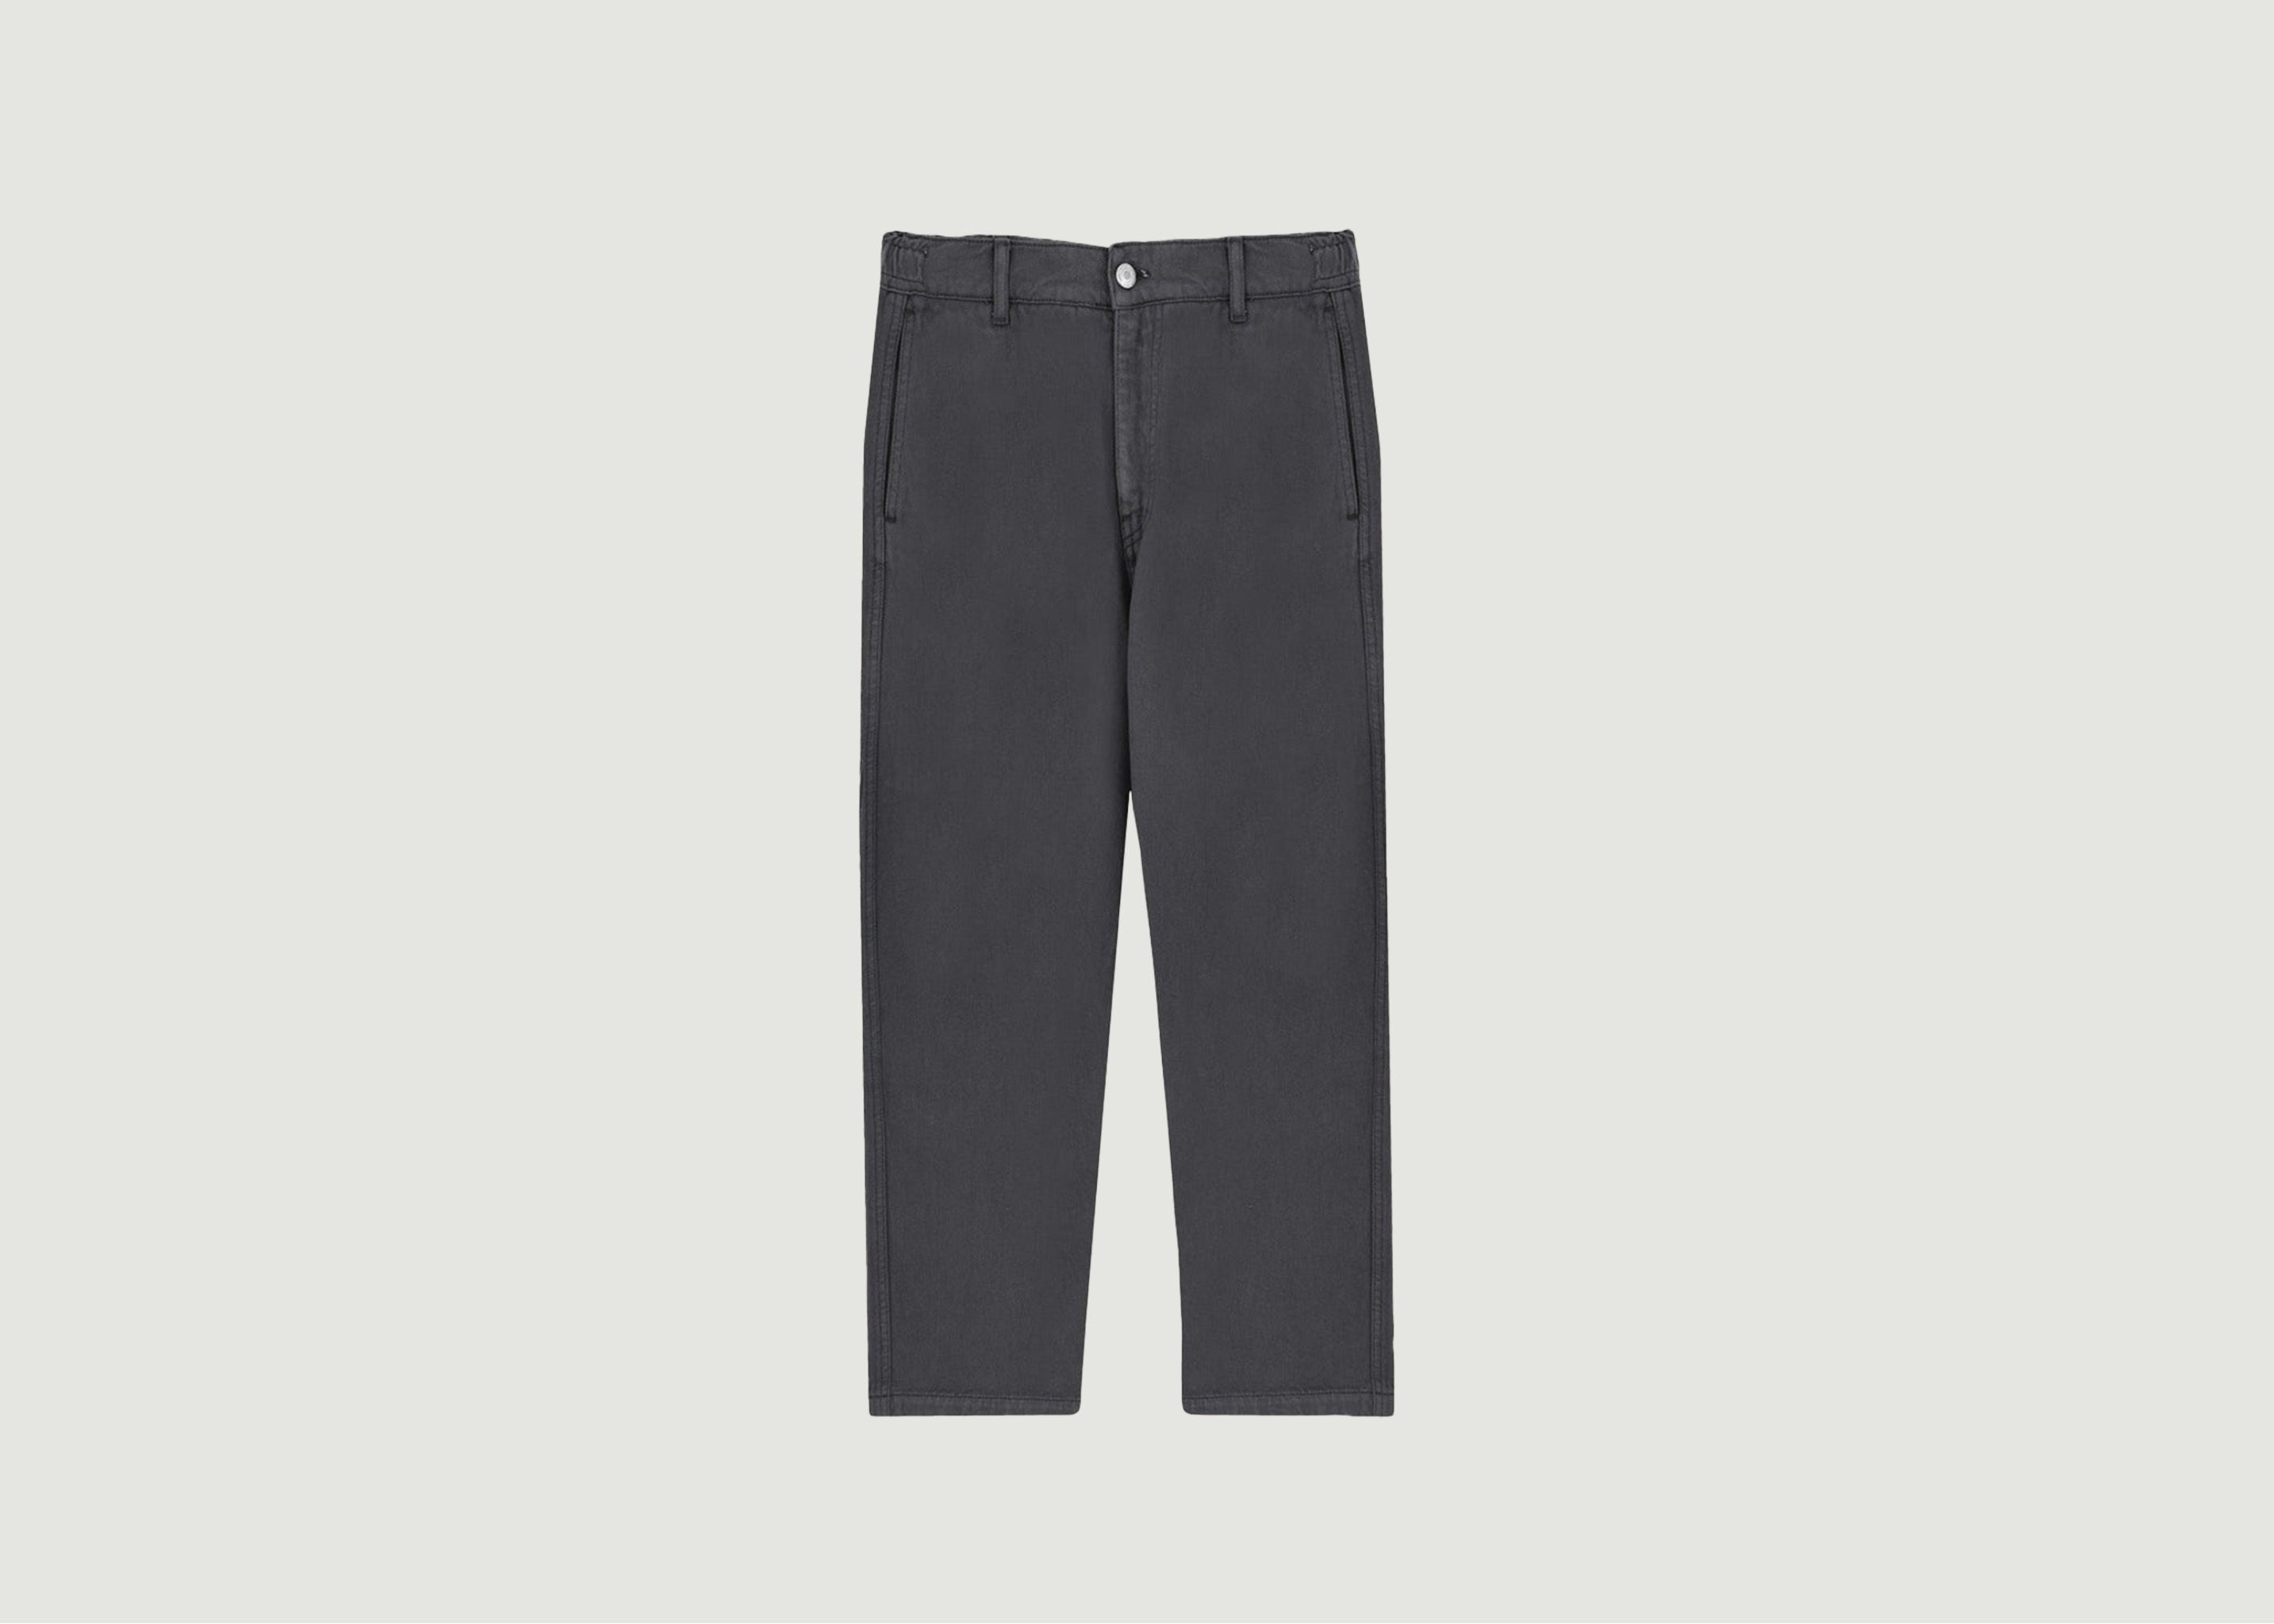 Calder trousers - noyoco